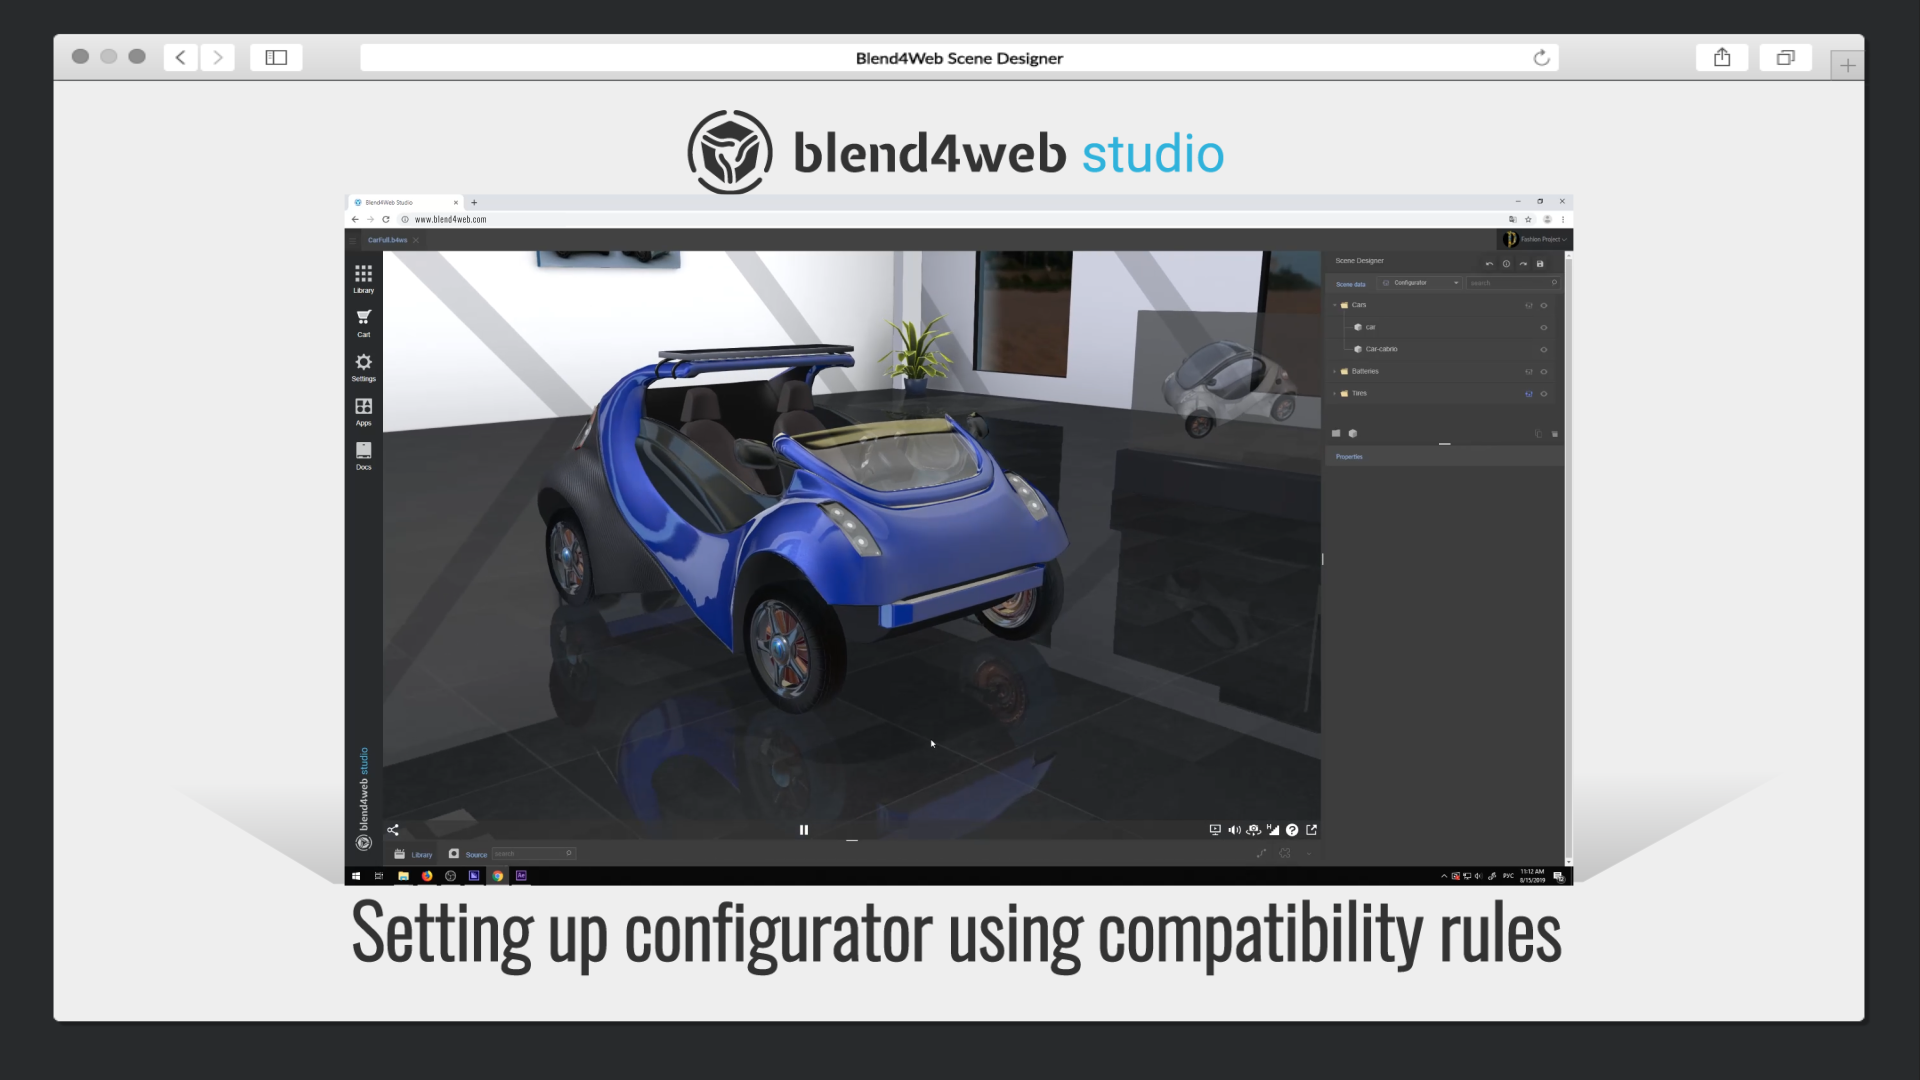 Blend4Web Scene Designer: Setting up configurator using compatibility rules